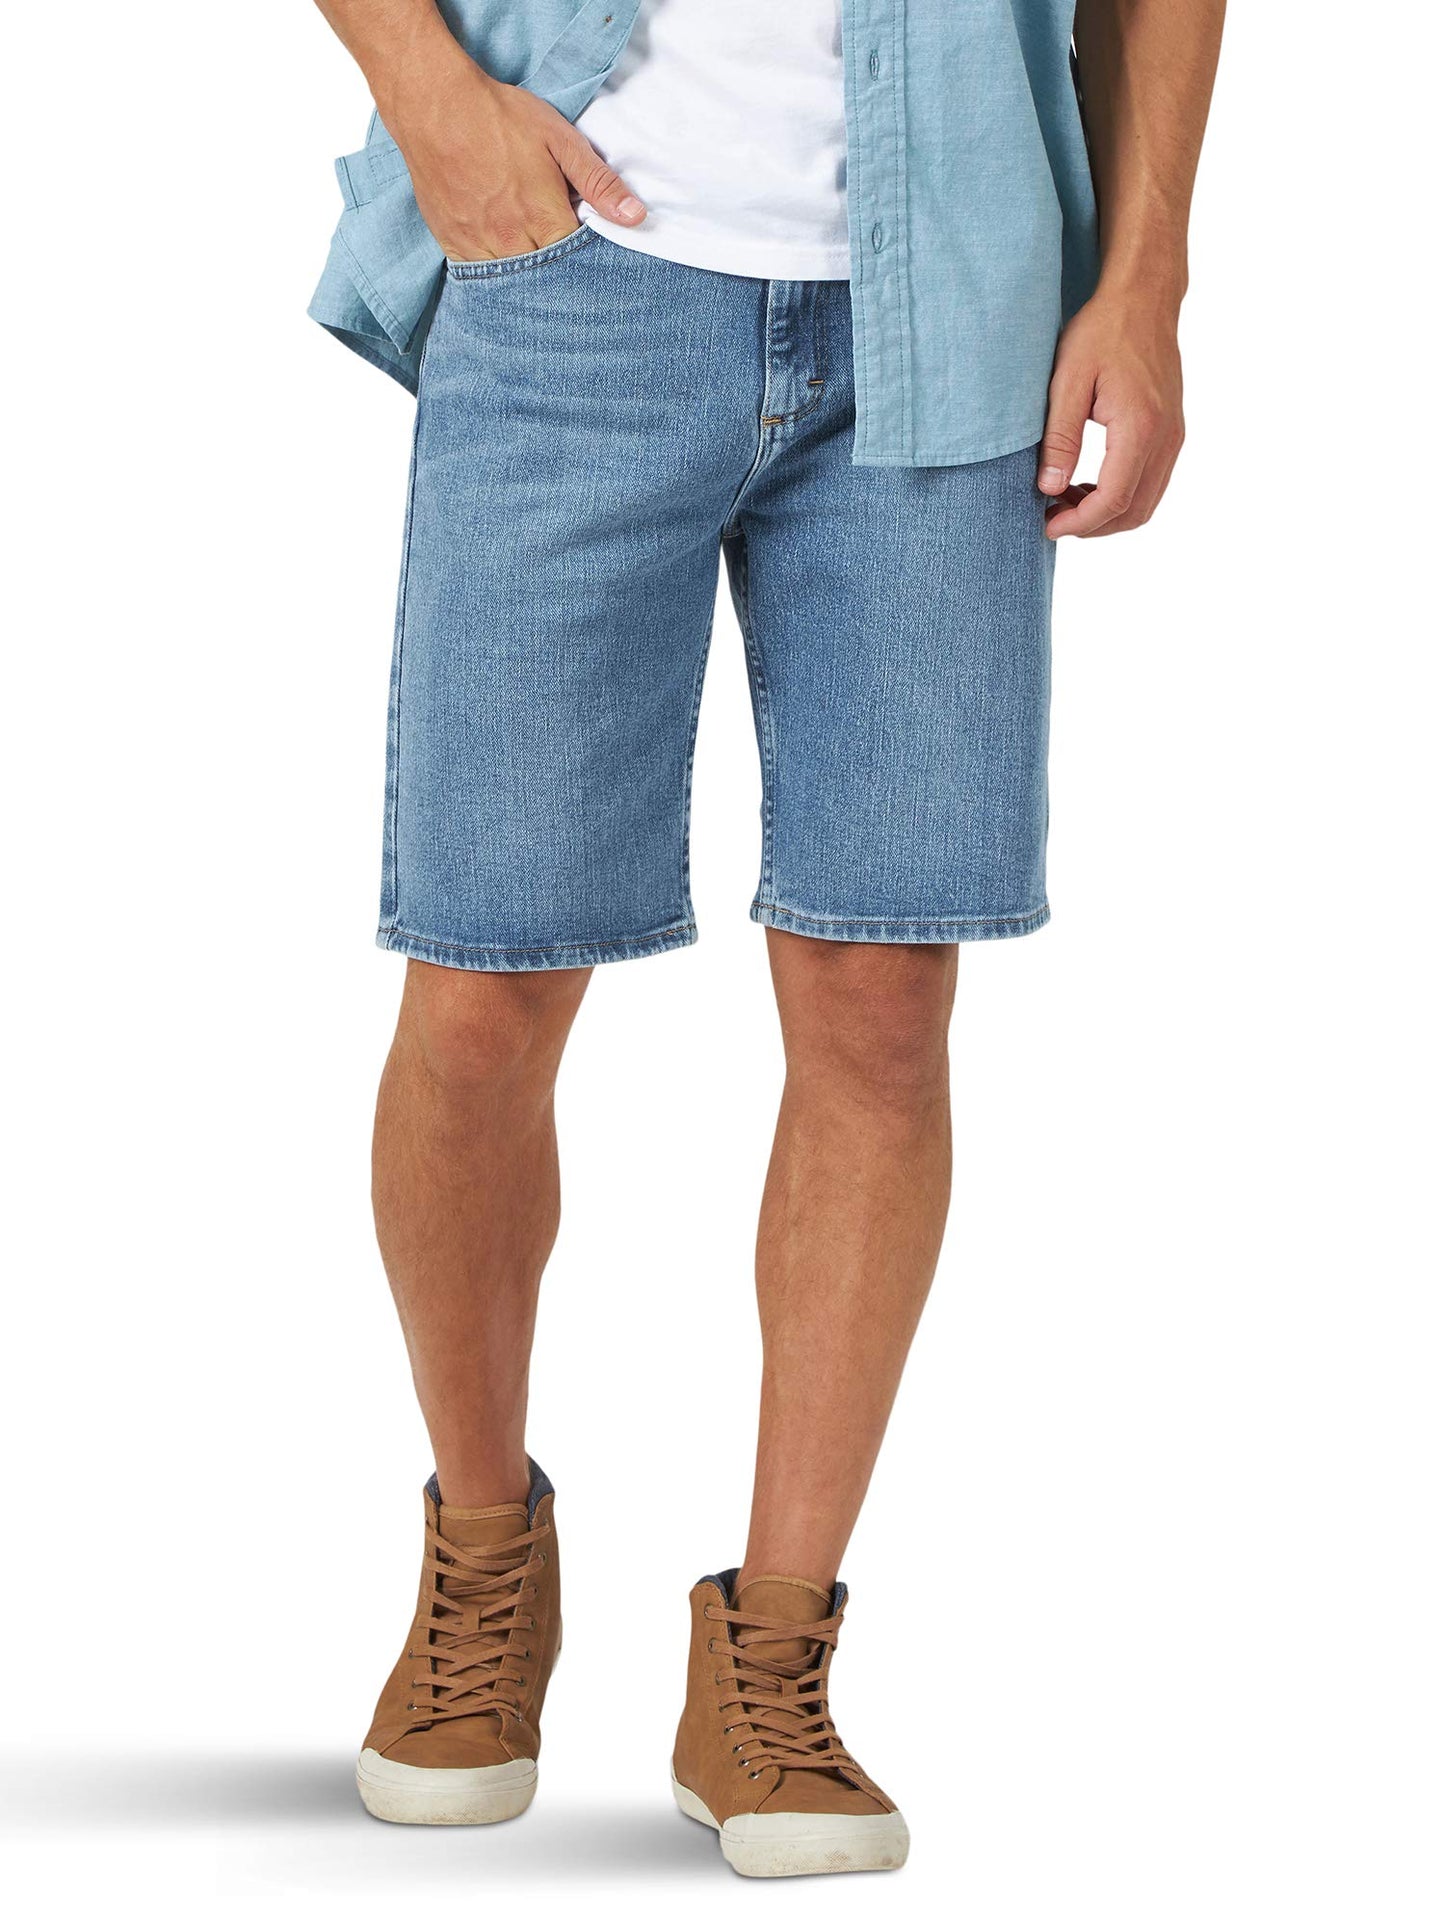 Wrangler Authentics Men's Classic Relaxed Fit Five Pocket Jean Short, Light Wash Flex, 40